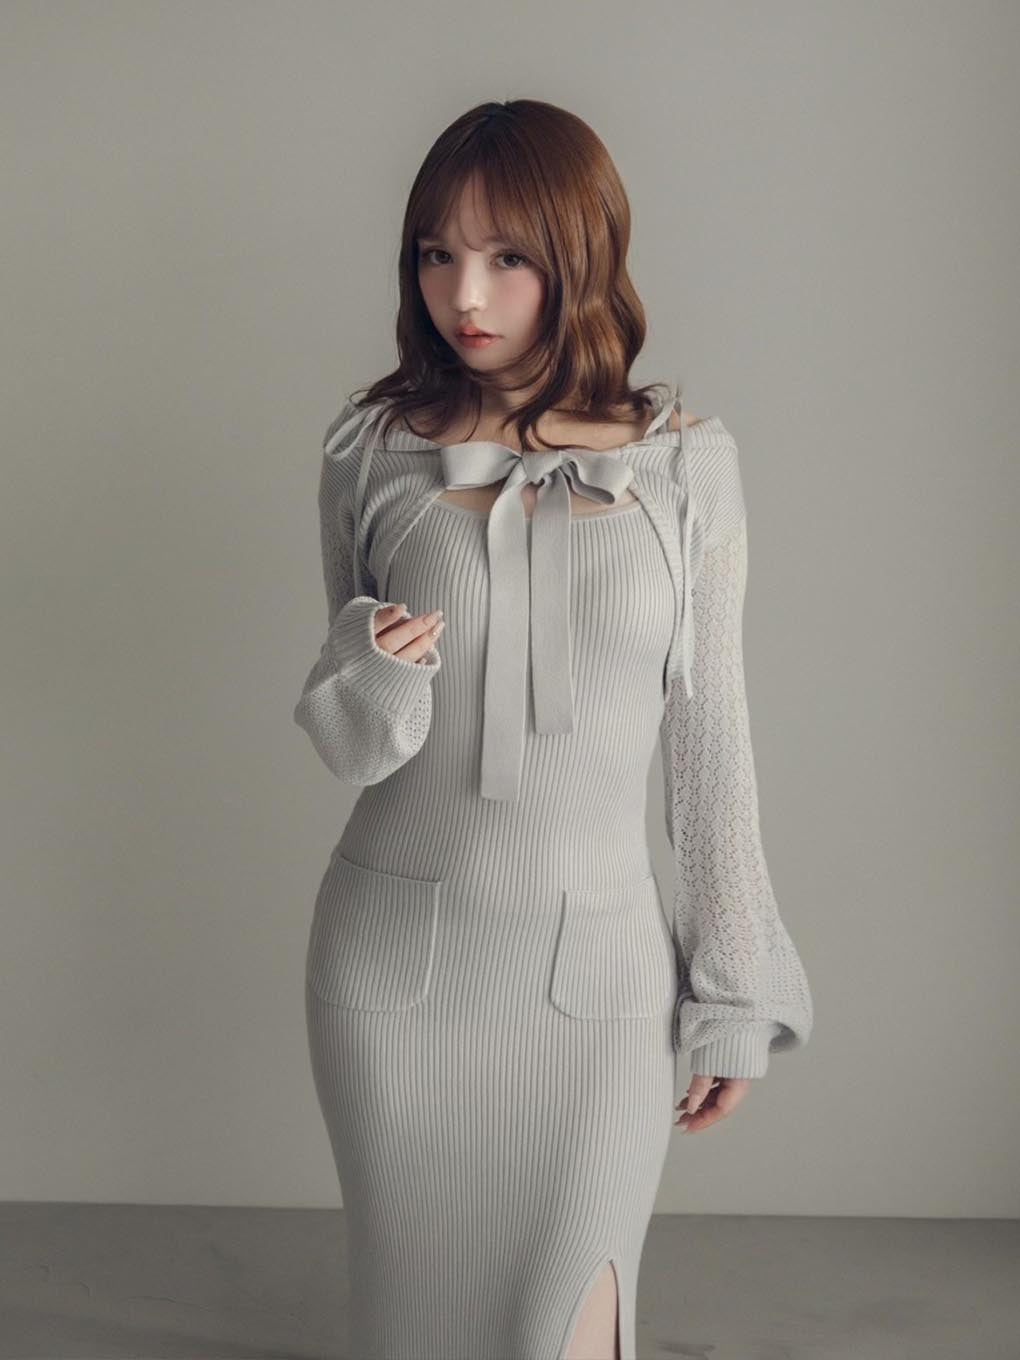 andmary kyla crochet dress3万円でよろしくお願いします